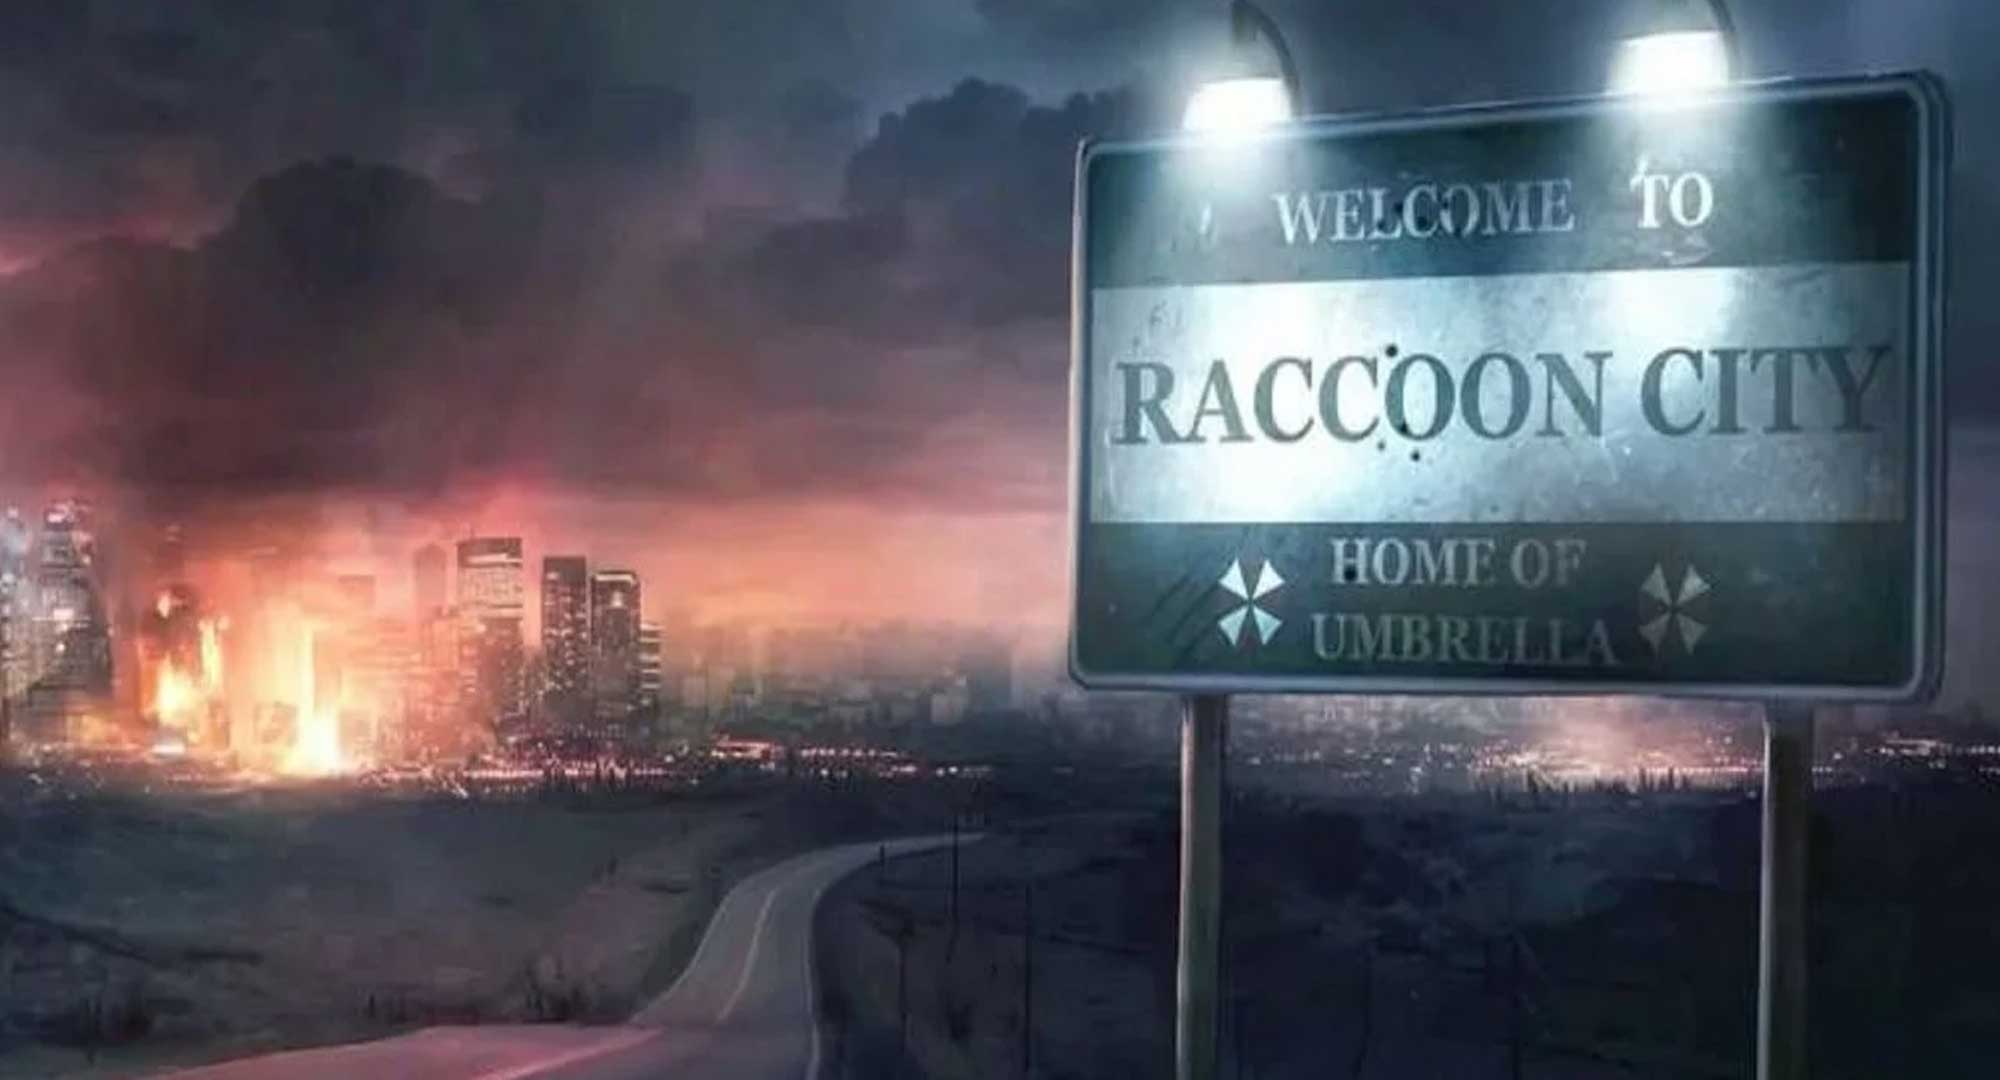 most hateful cities - Raccoon city